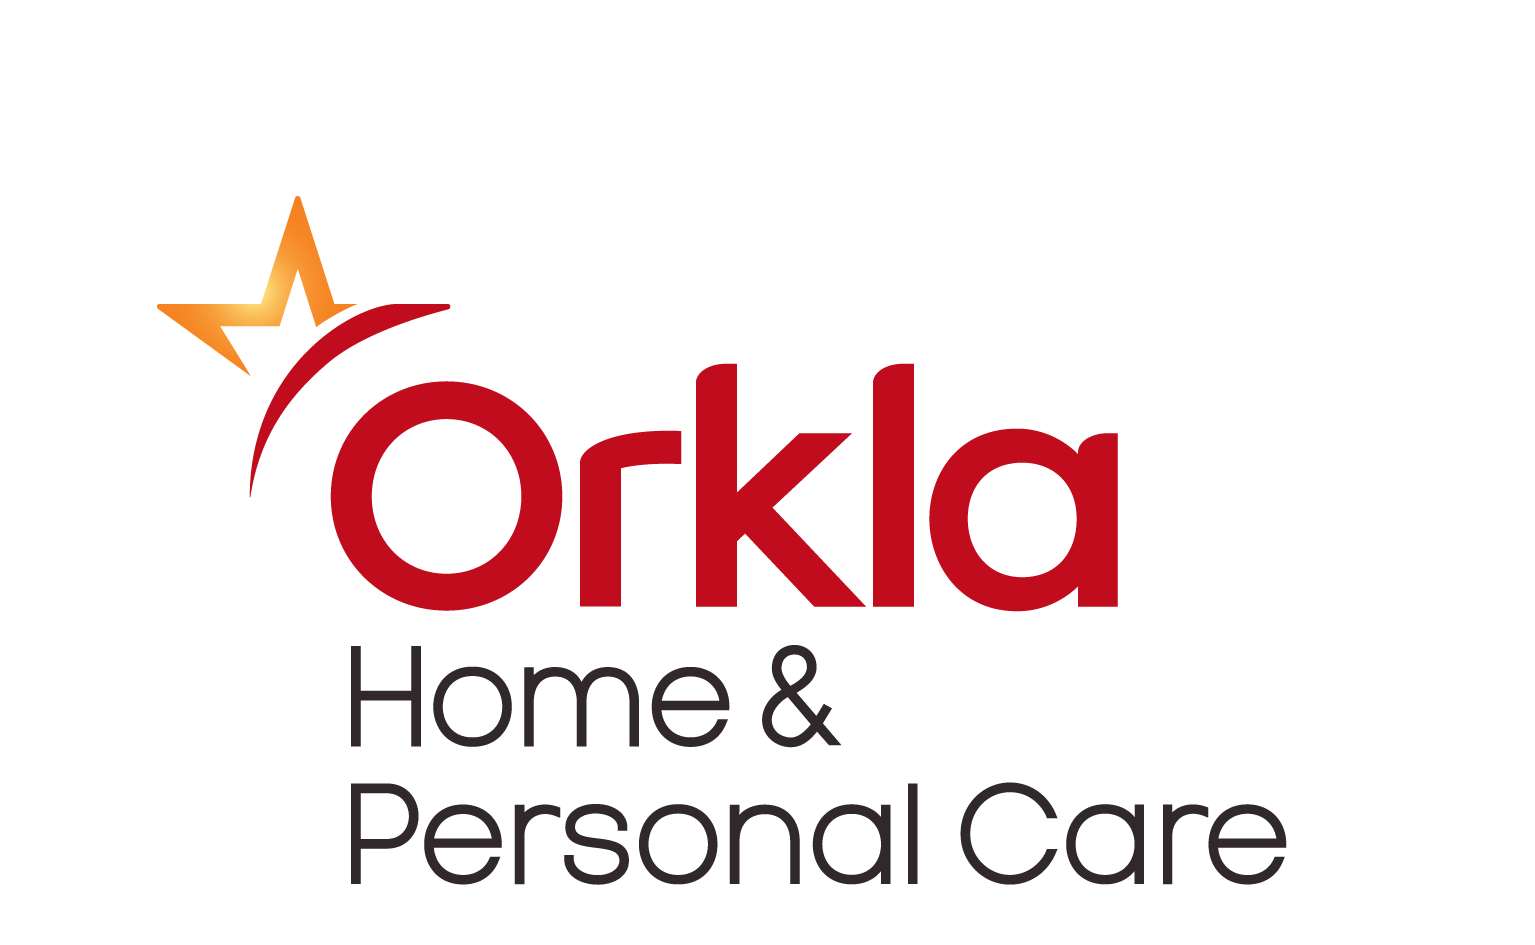 Orkla Home & Personal Care